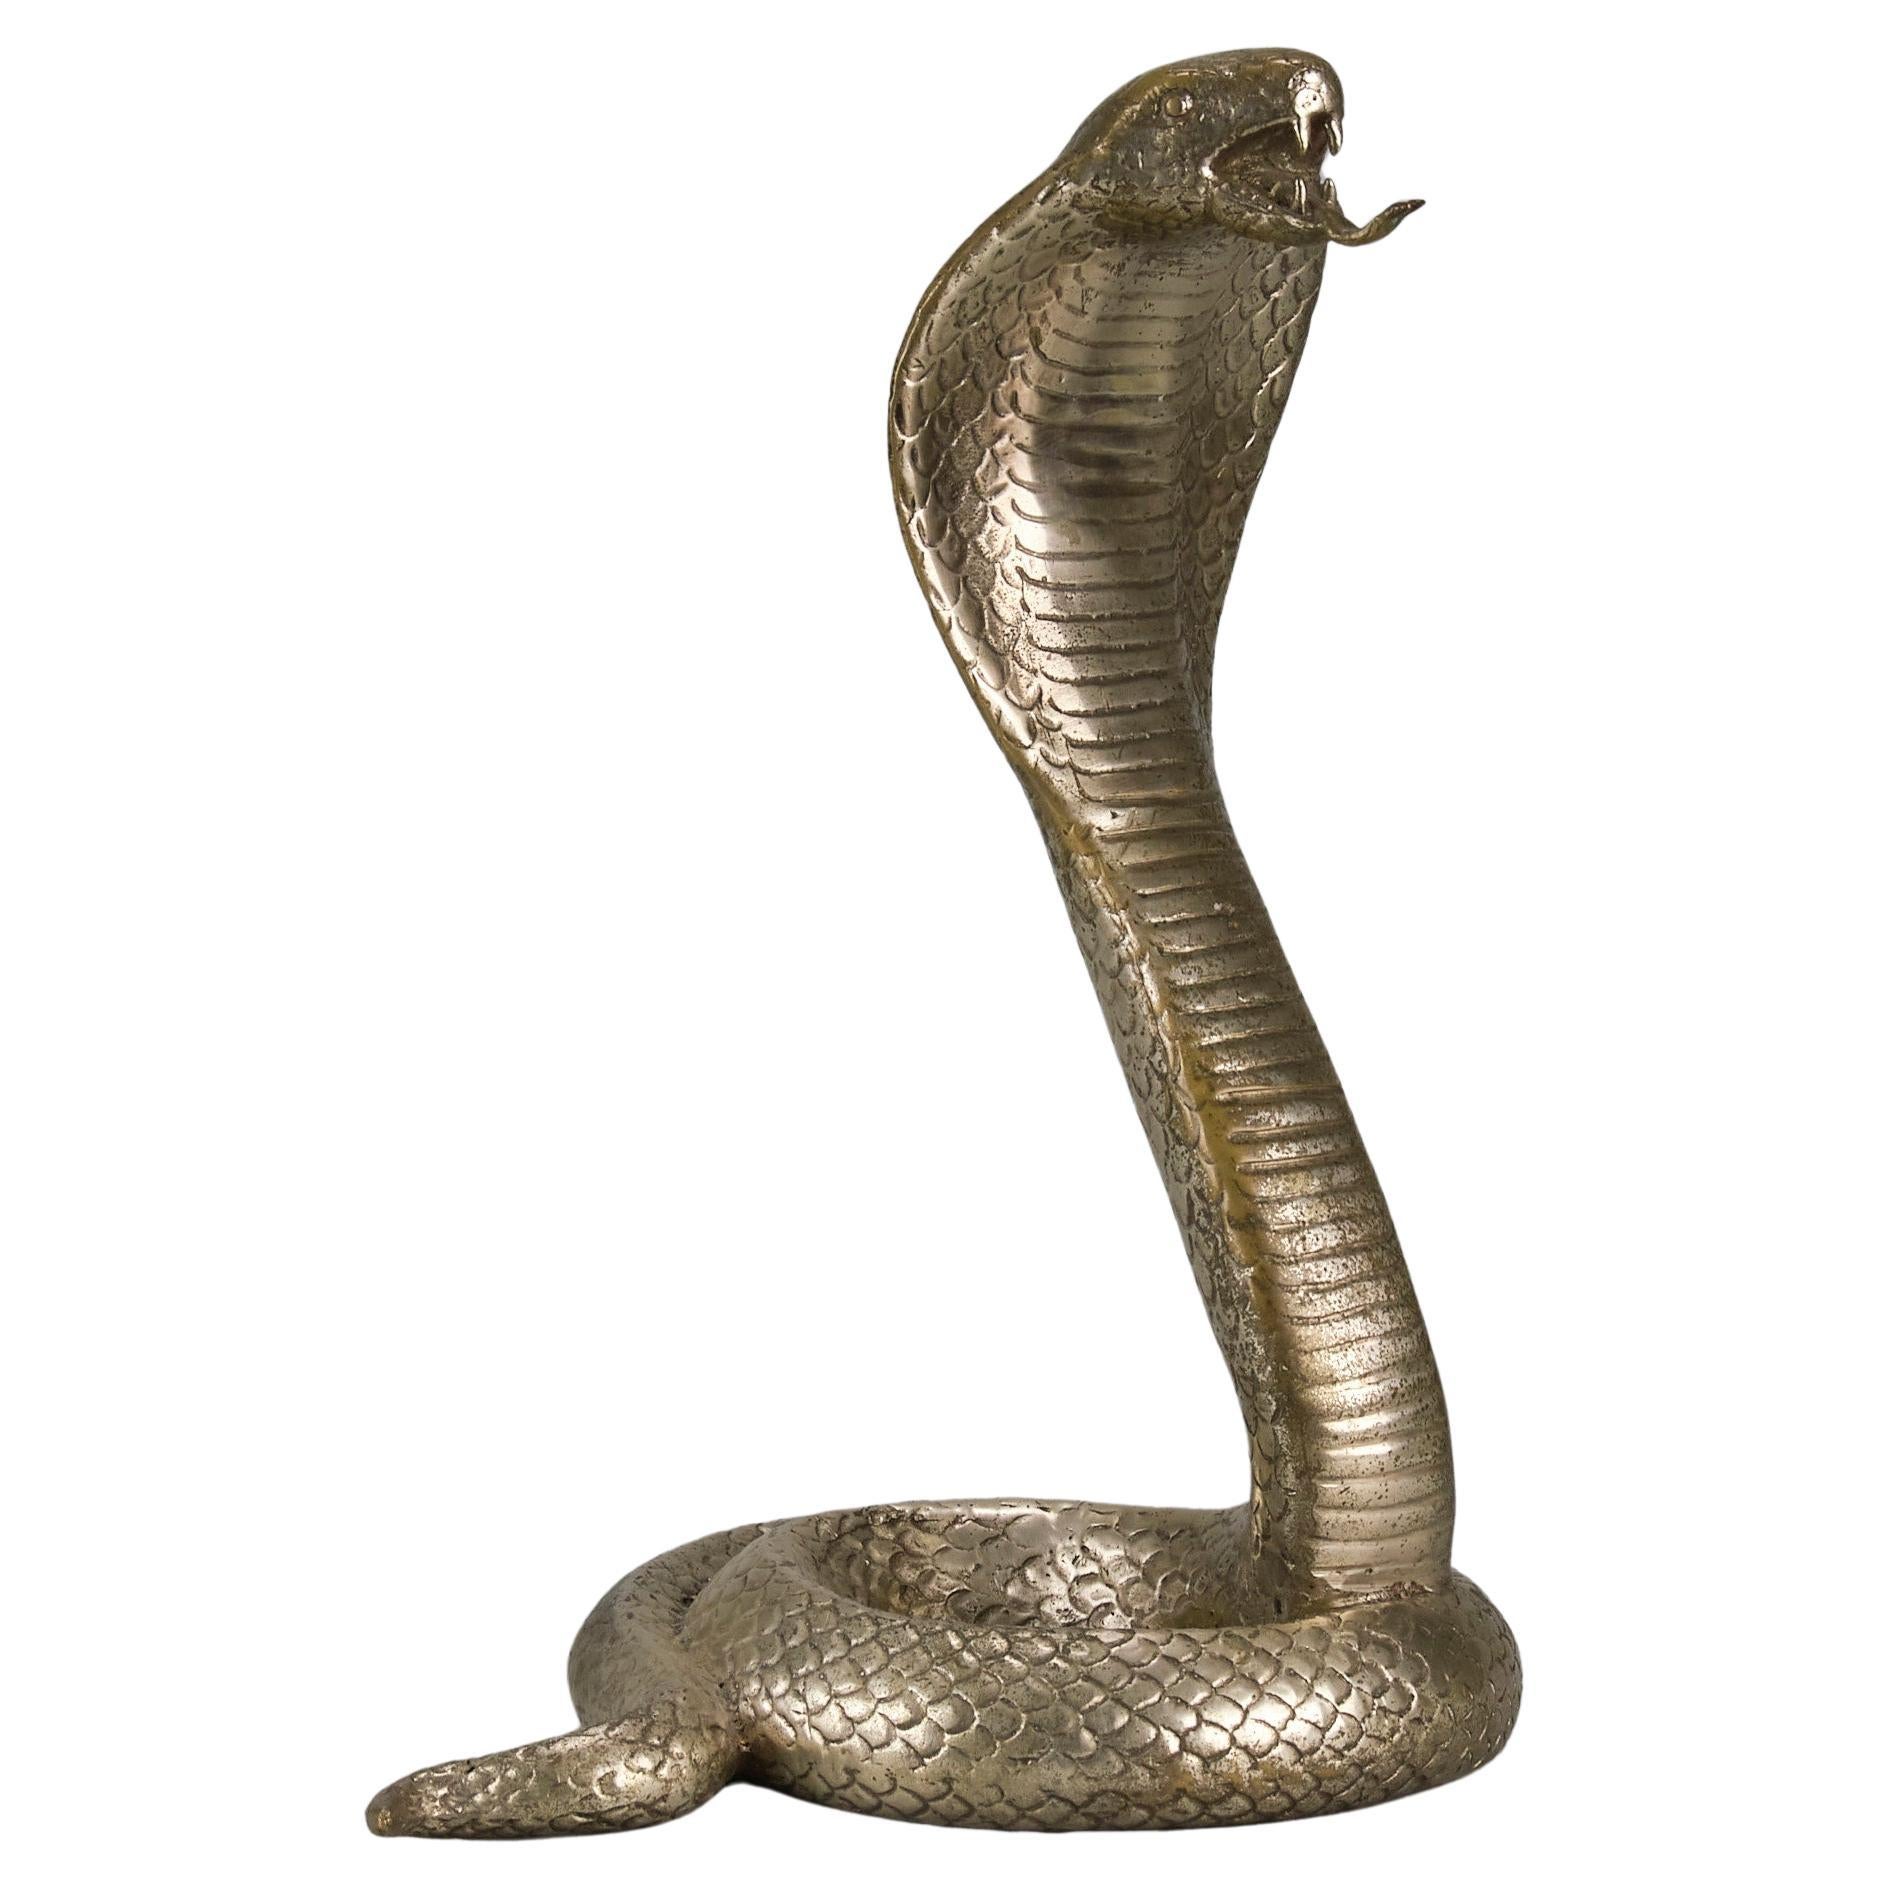 Early 20th Century Italian Silvered Bronze "Rearing Snake"